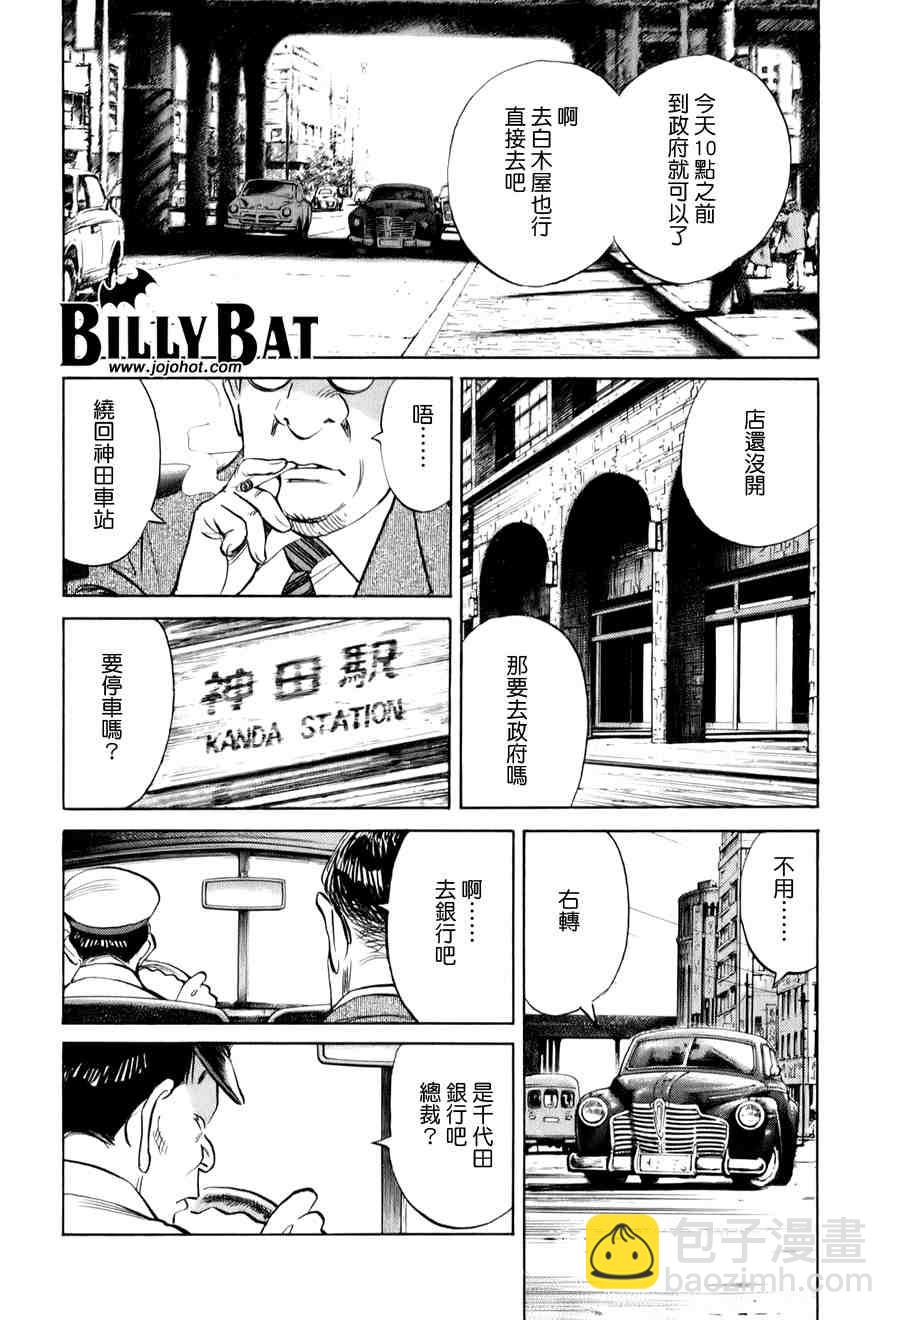 Billy_Bat - 第1卷(3/4) - 7